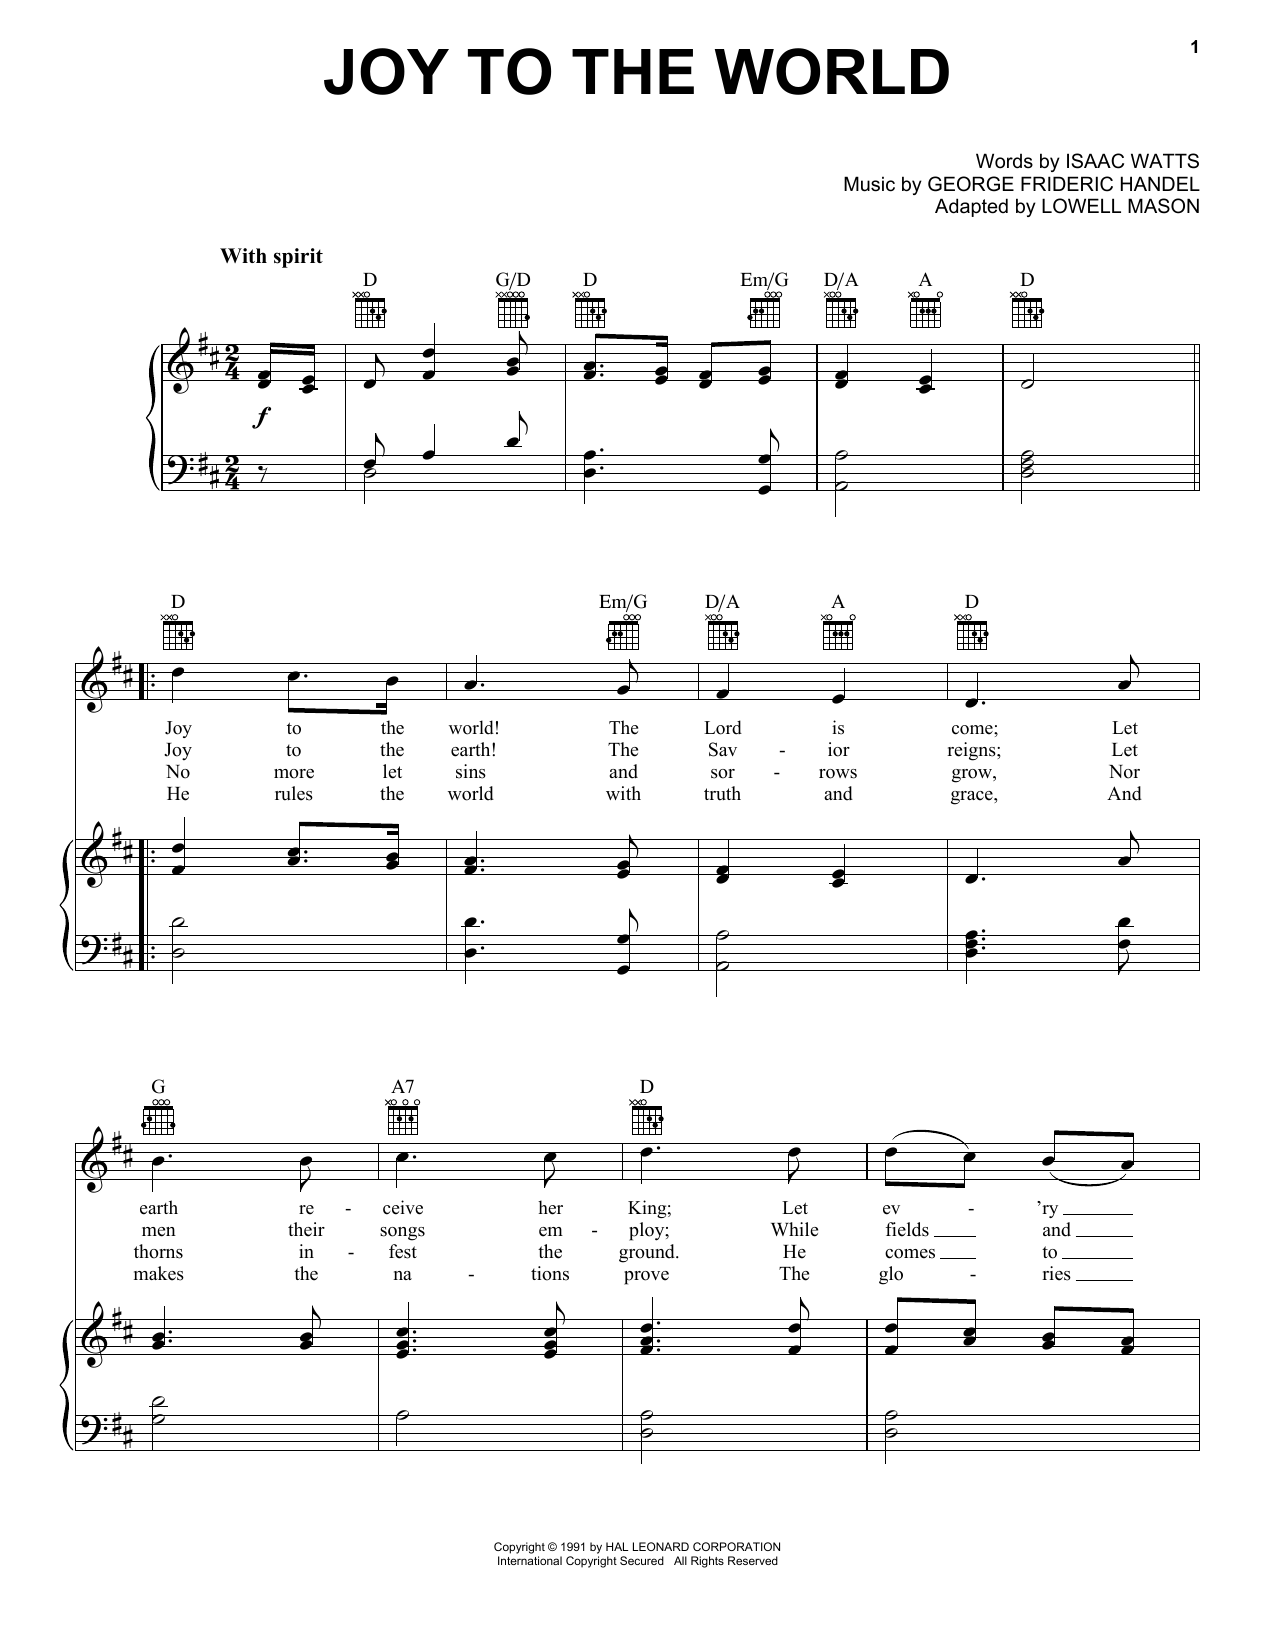 Joy To The World sheet music